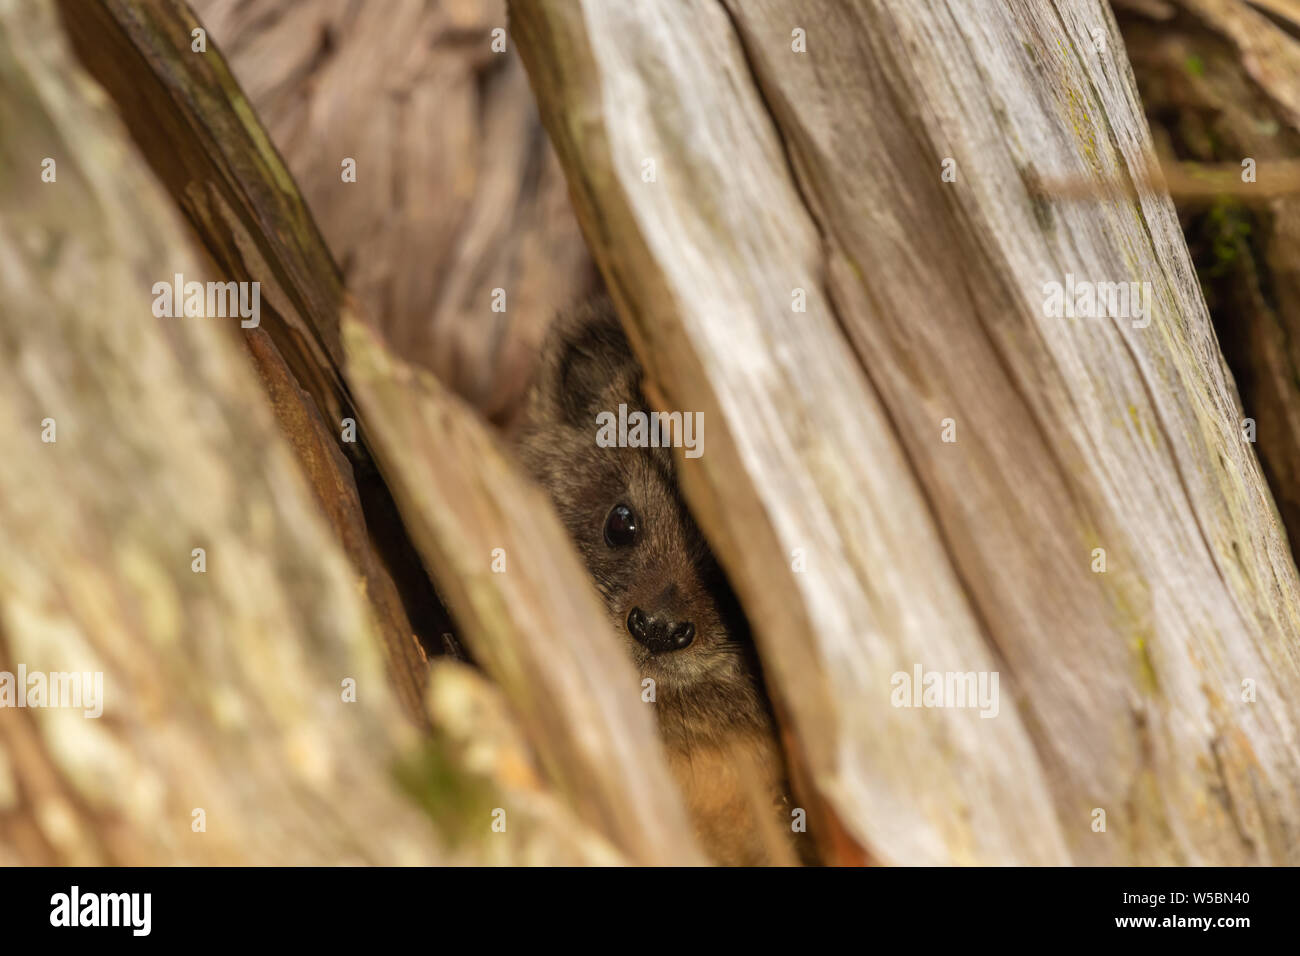 Tree Hyrax in daytime hiding in cracked branch of tree, in Nanyuki, Laikipia county, Kenya. Stock Photo